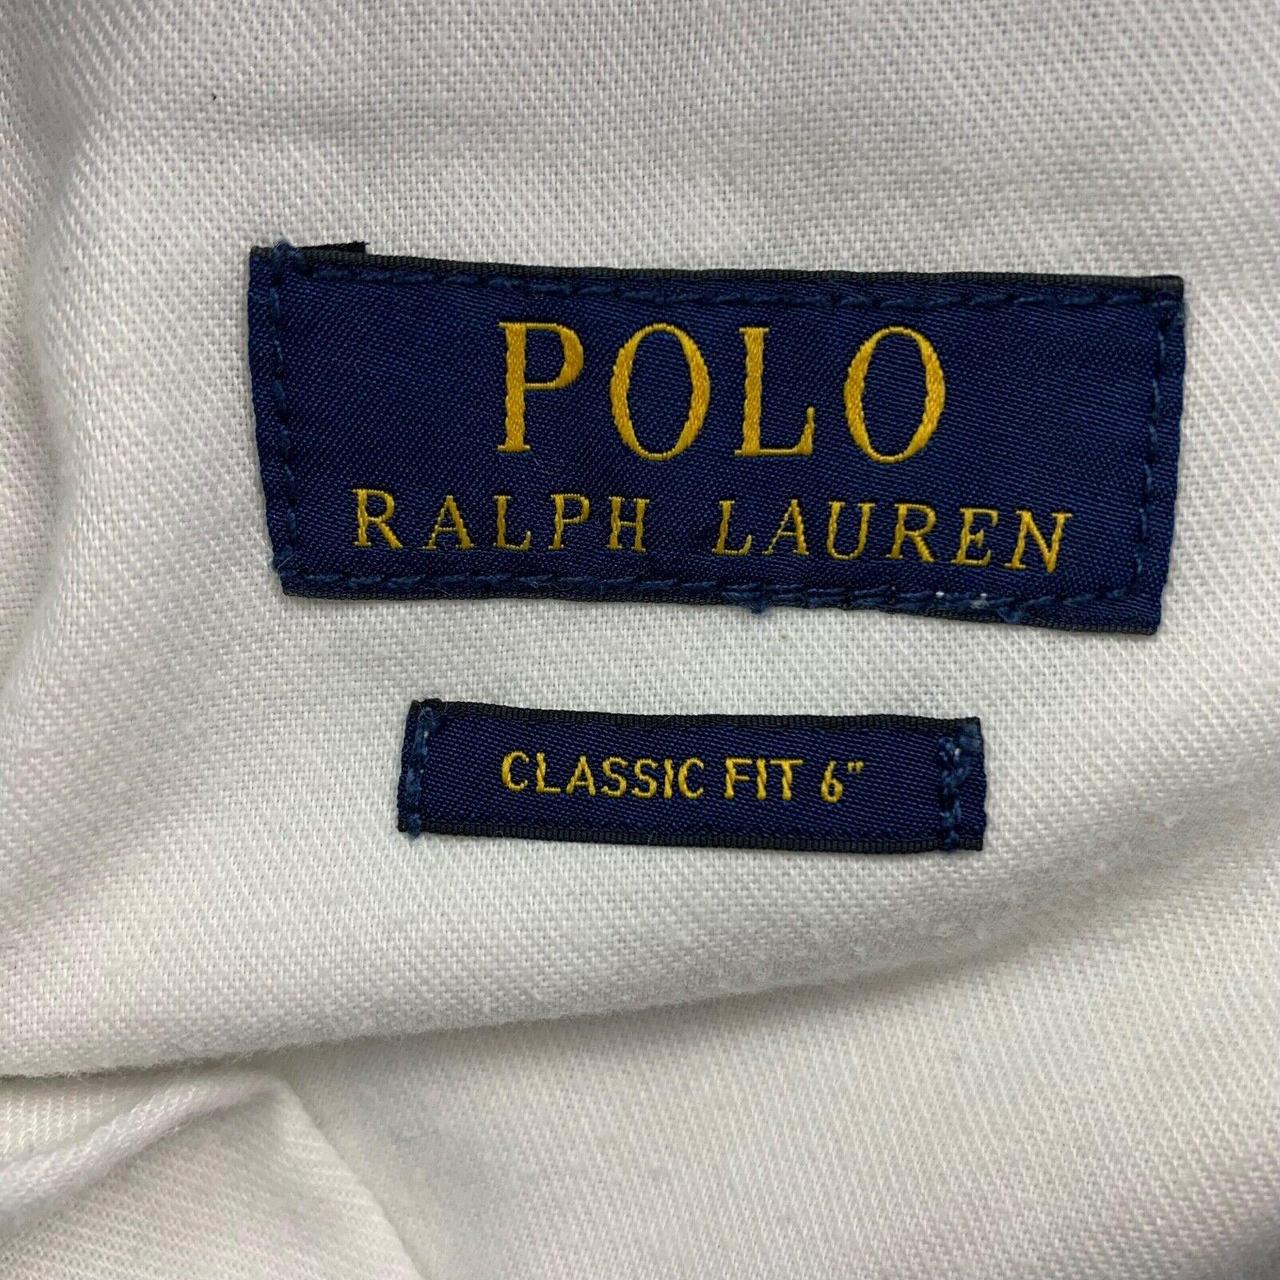 Polo Ralph Lauren Men's Classic Fit 6